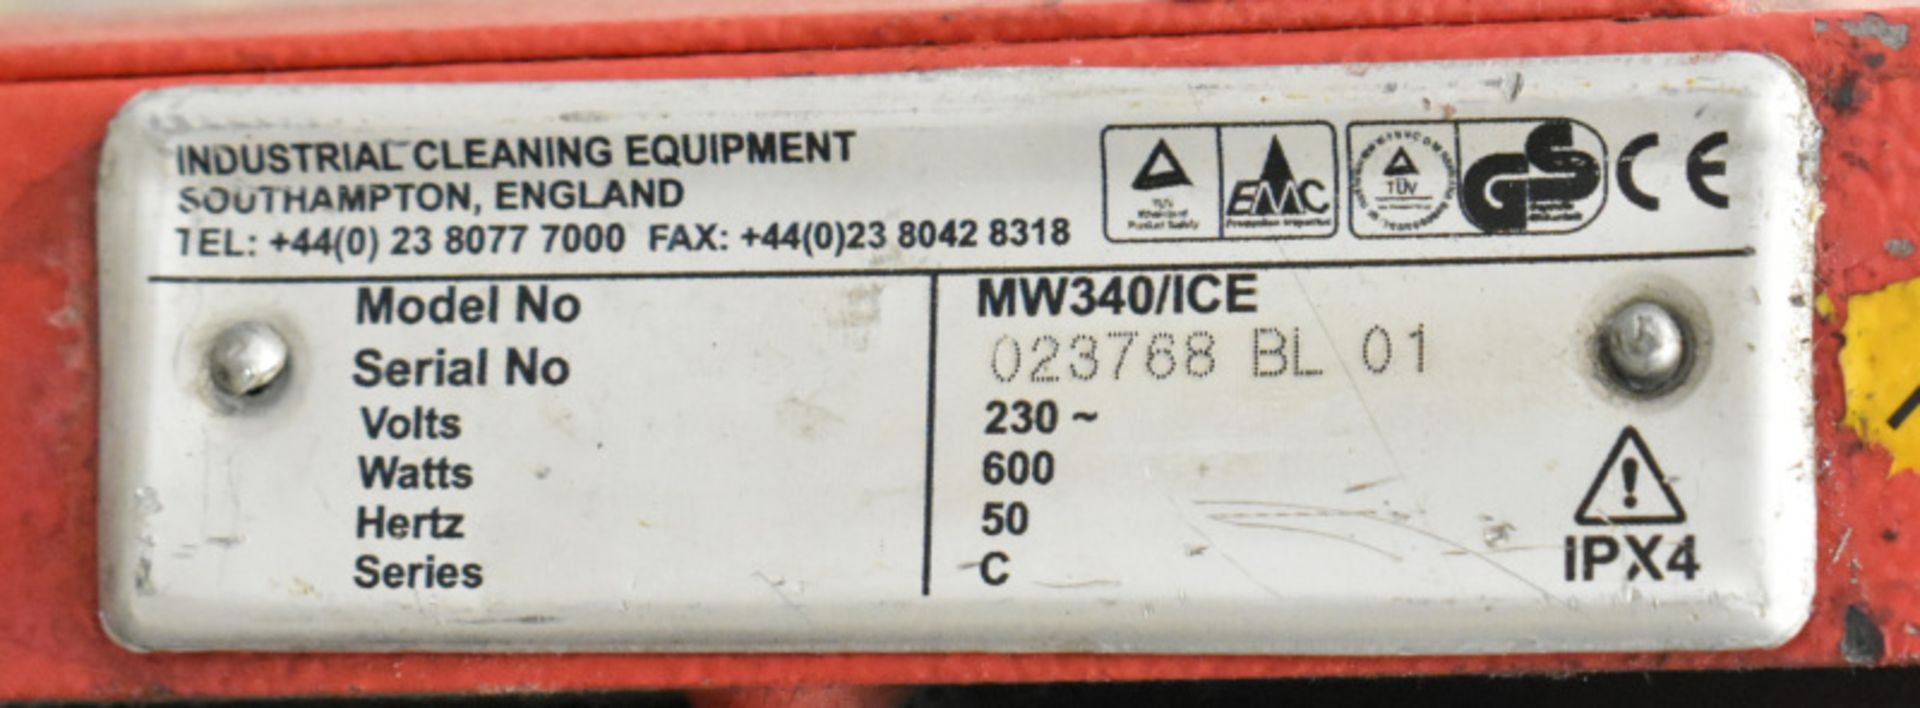 2 x Truvox Multiwash Floor Scrubber Dryer, Model- MW340/ICE - Image 6 of 6